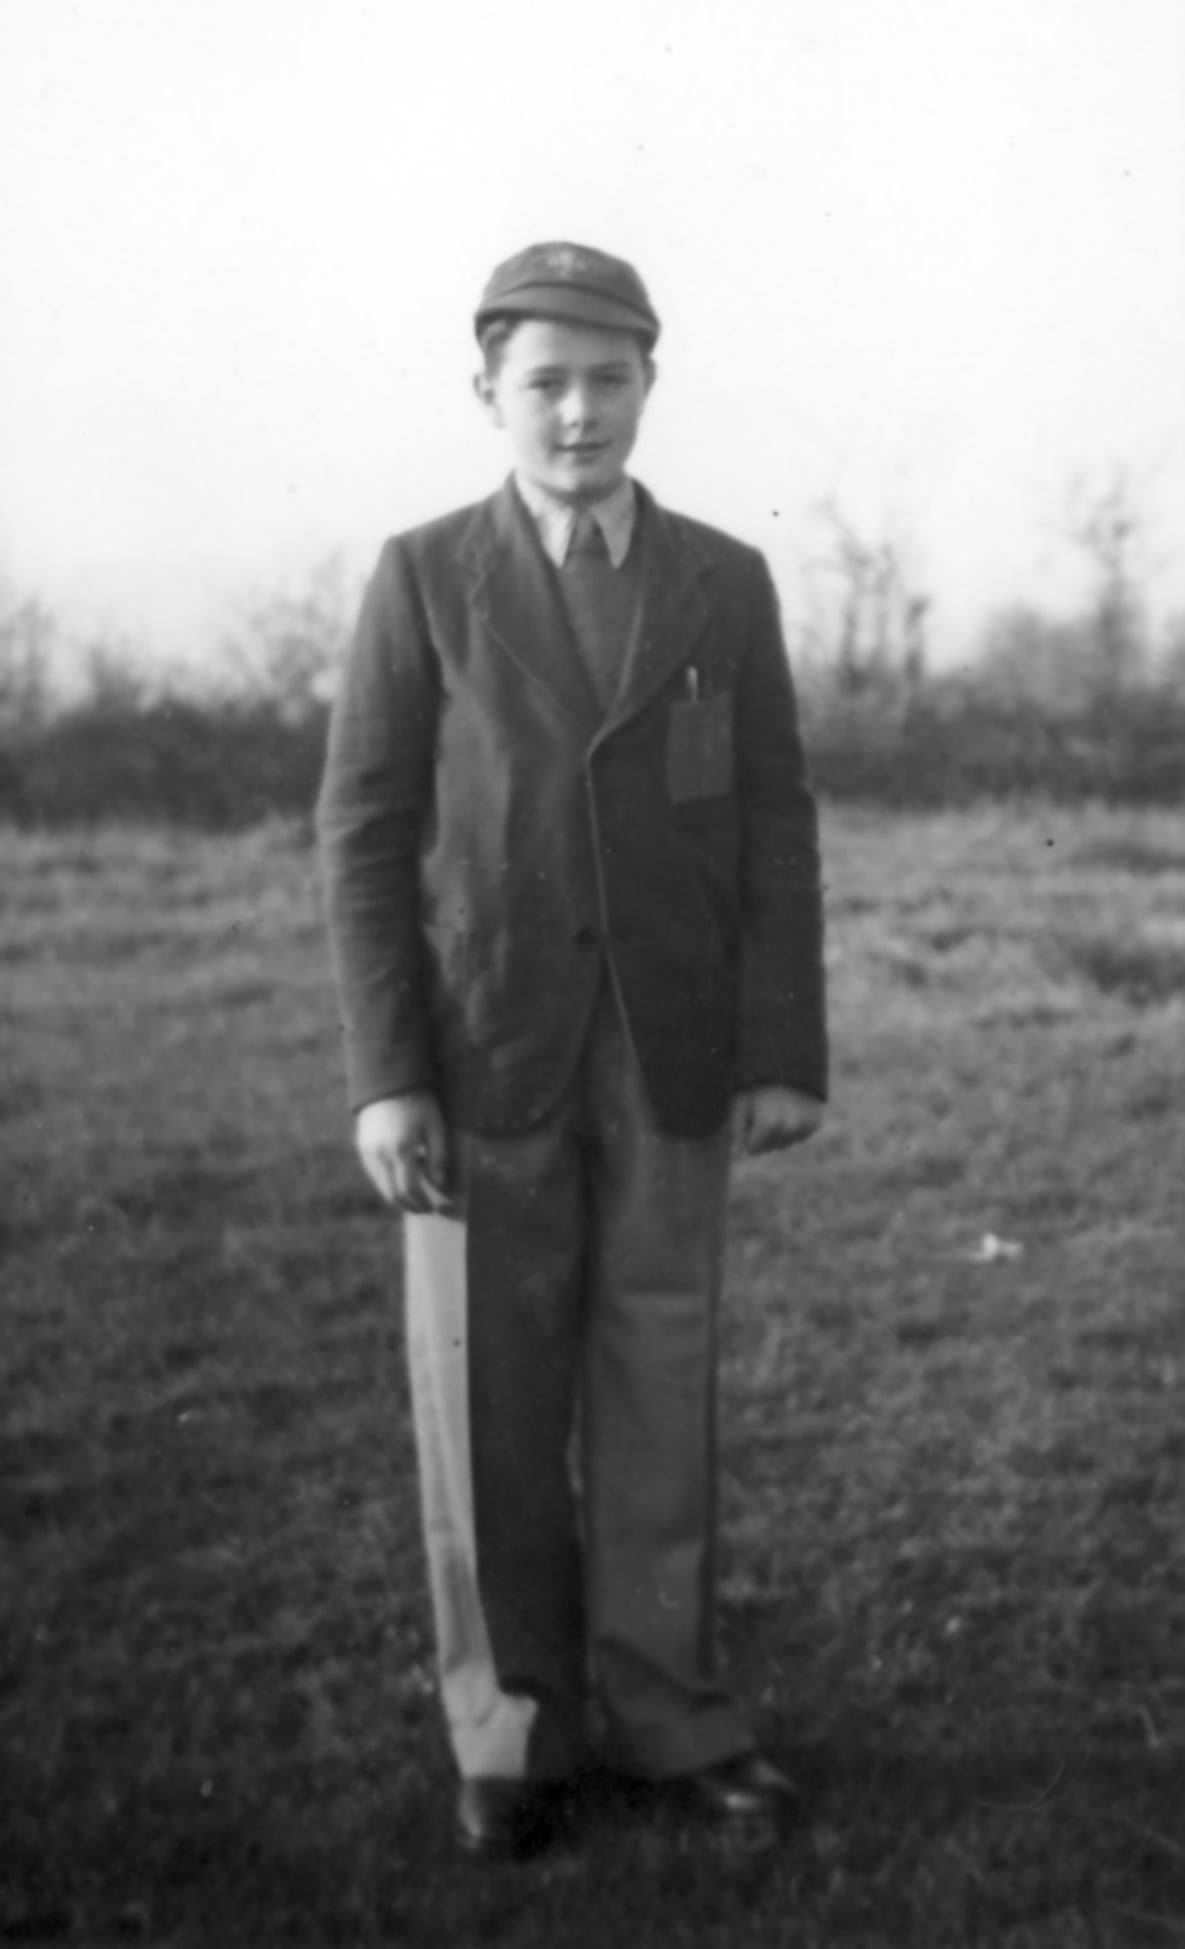 Uniform - Michael Bennet in his Colchester High School uniform